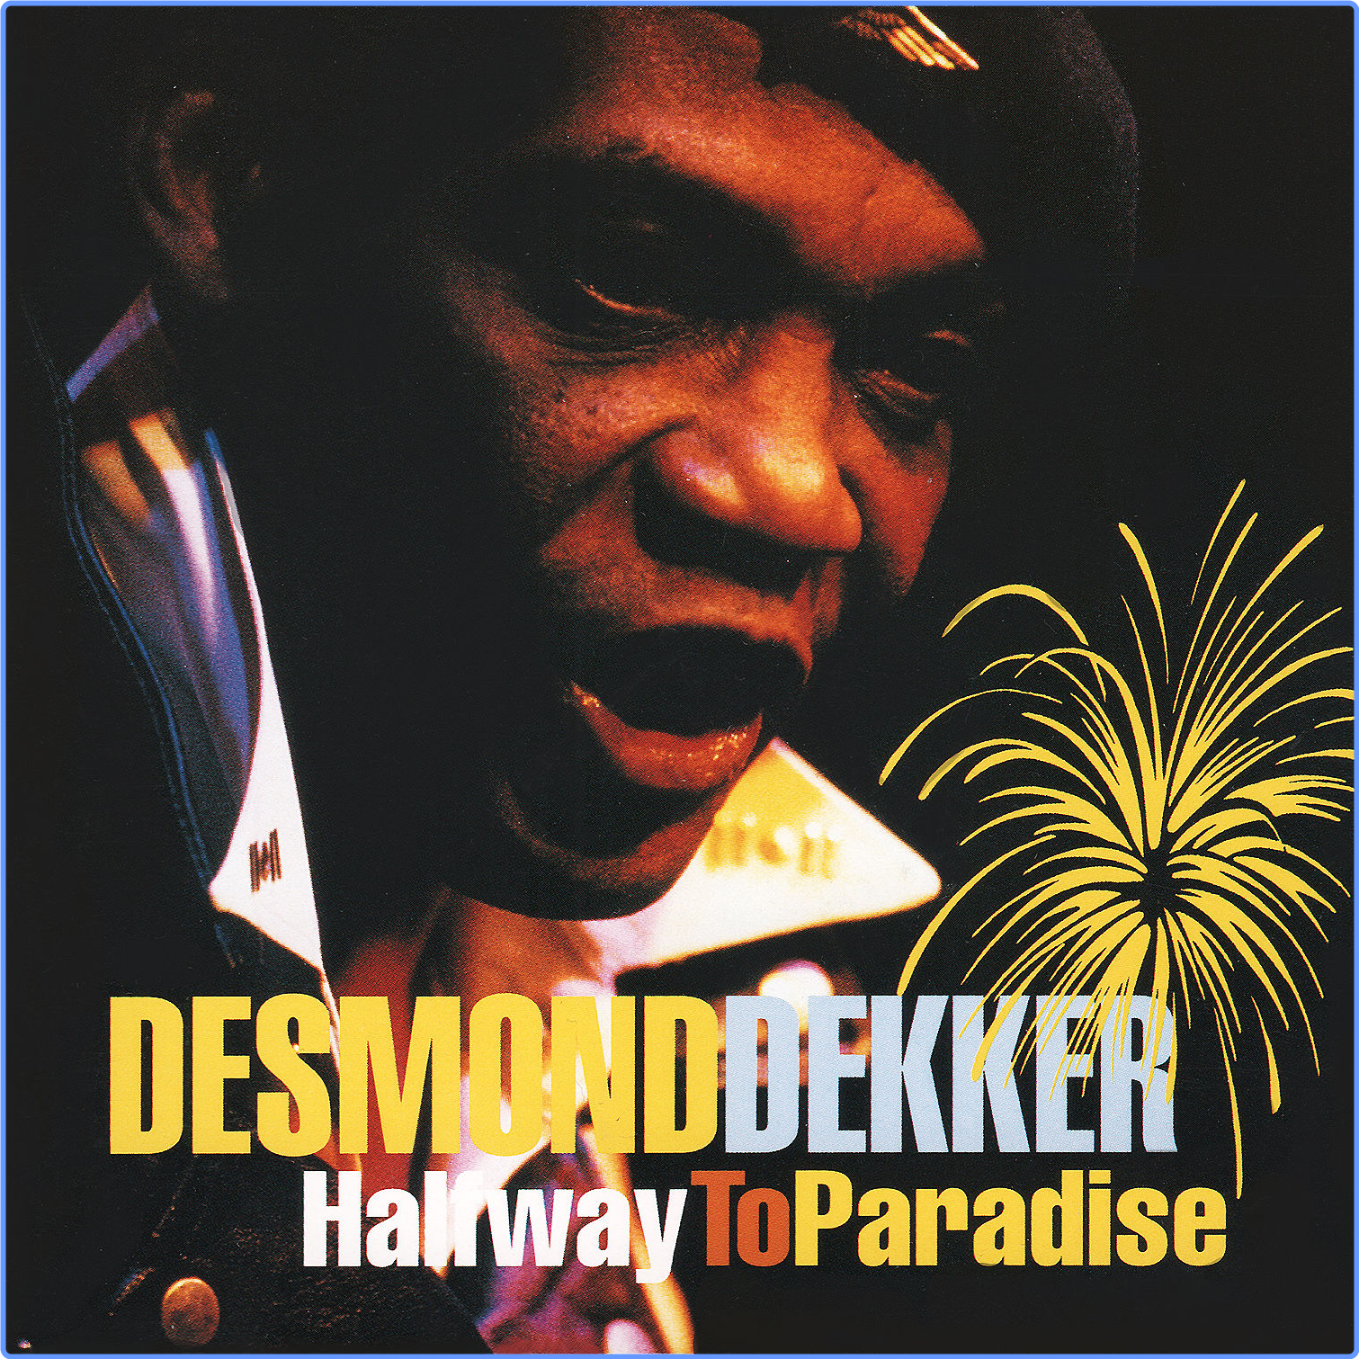 Desmond Dekker - Halfway to Paradise (2021) FLAC Scarica Gratis